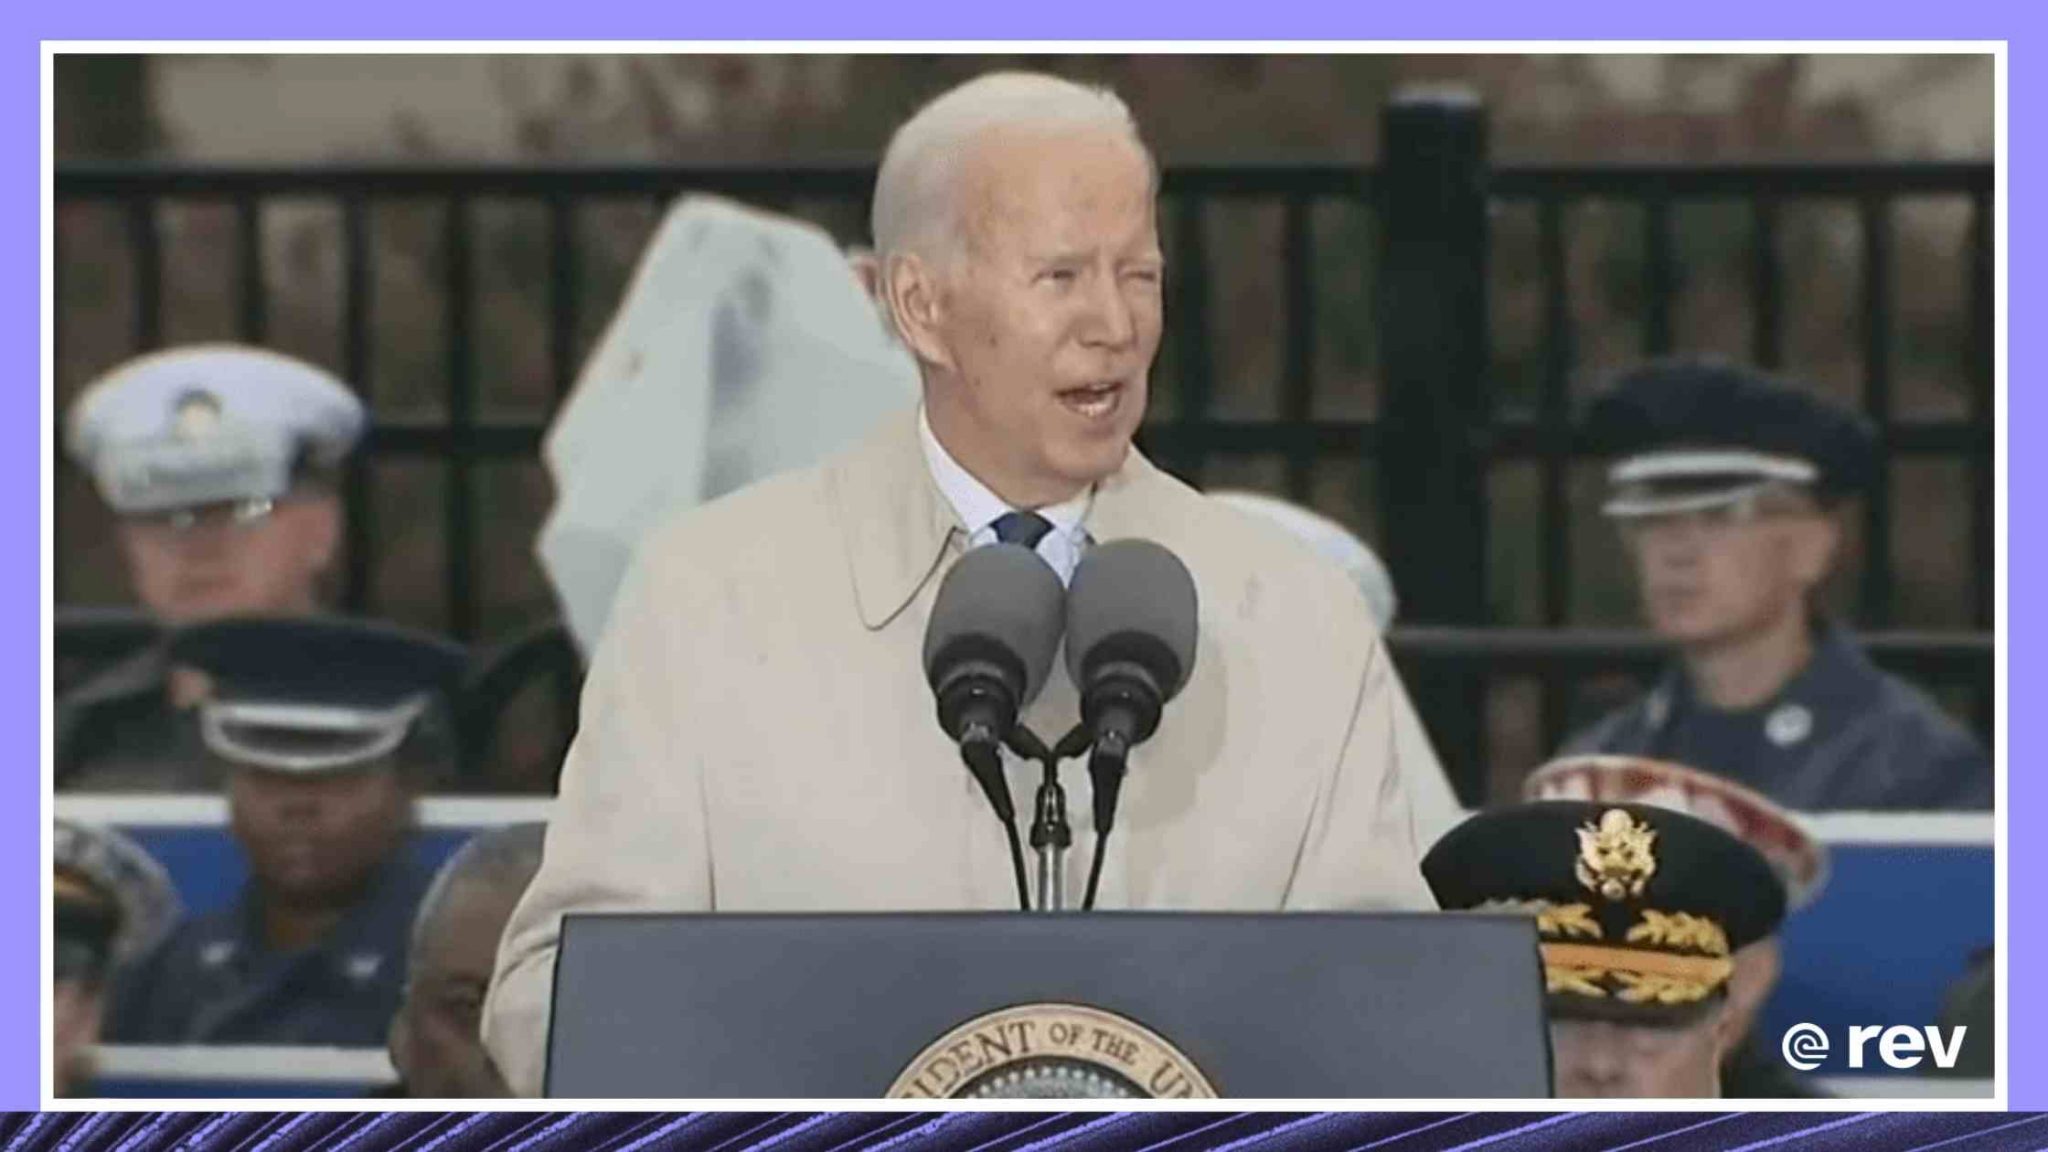 Biden delivers remarks on anniversary of 9/11 attacks Transcript